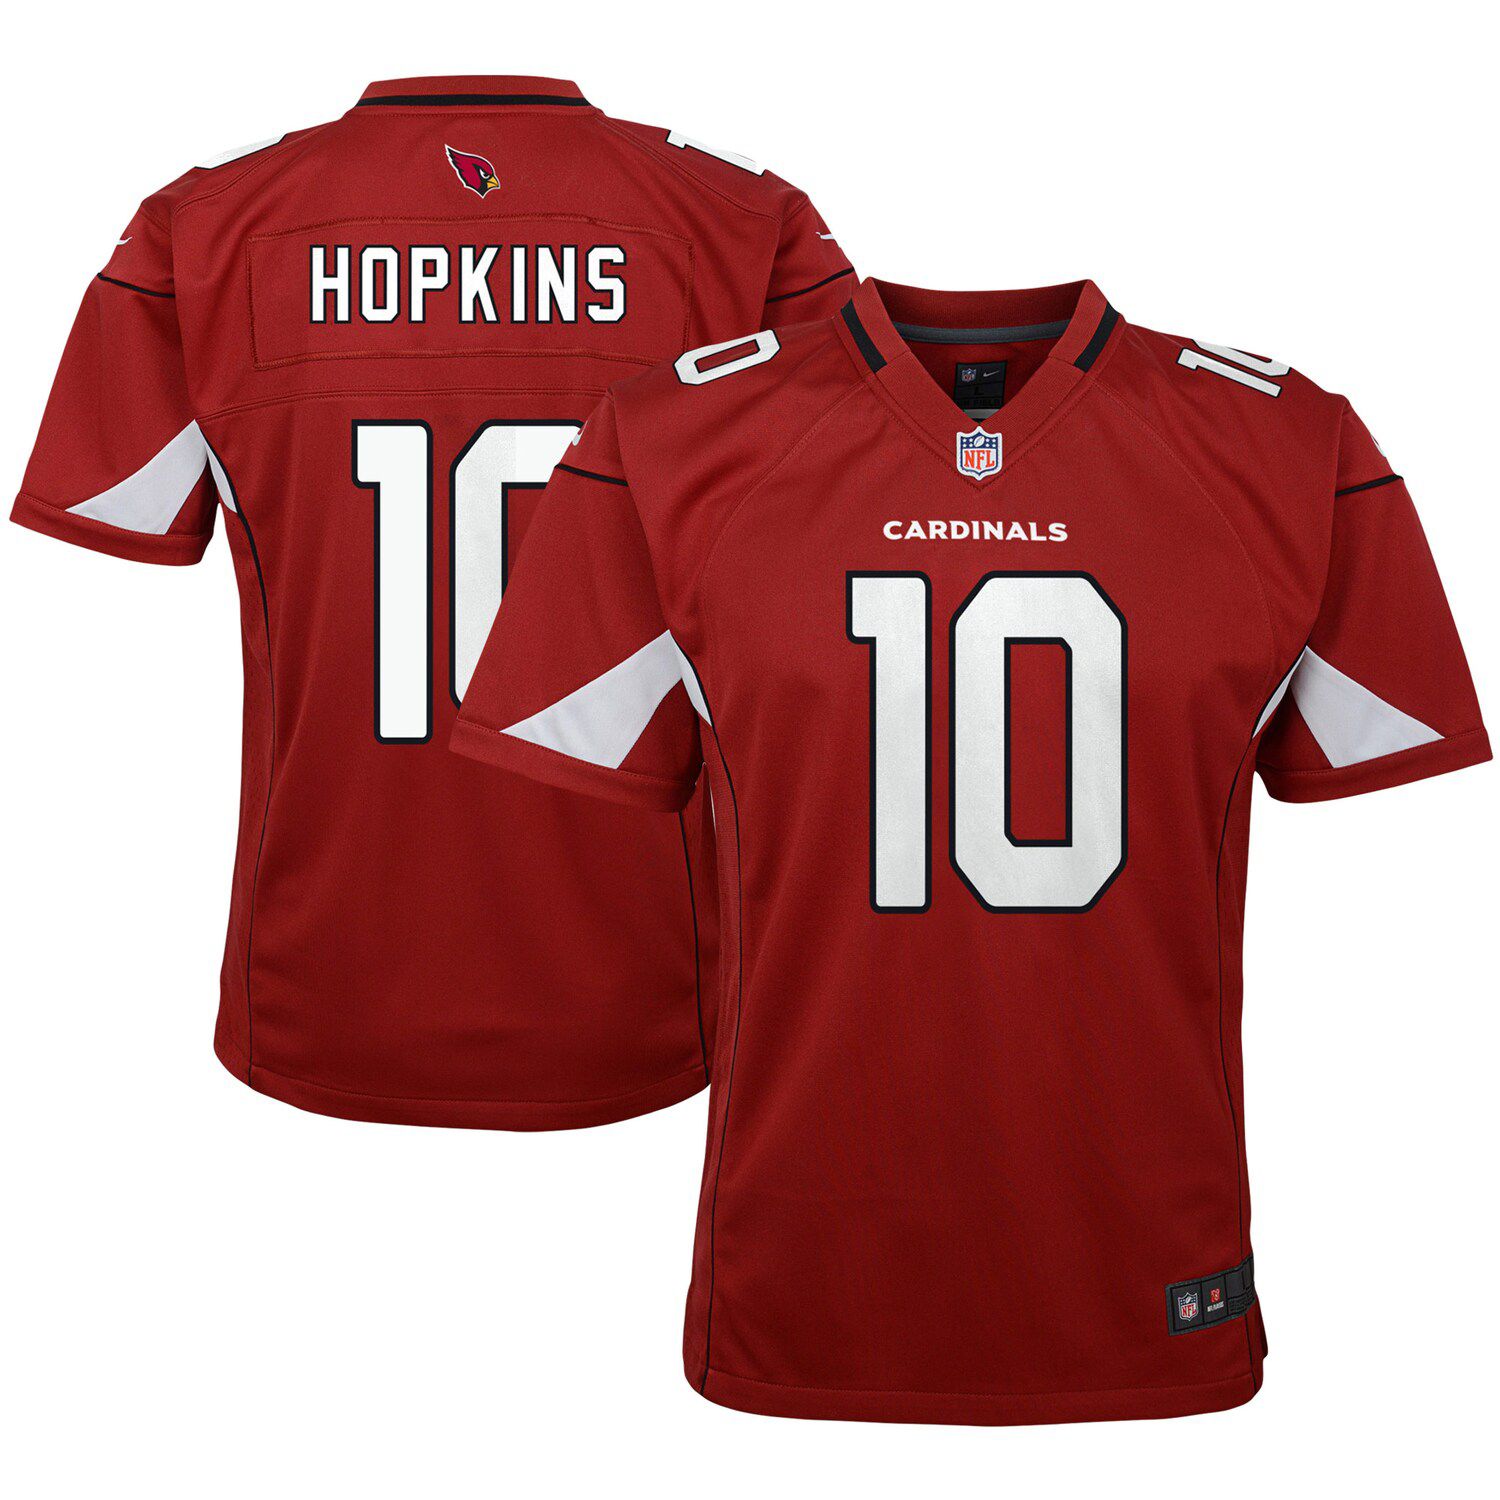 hopkins cardinals jersey